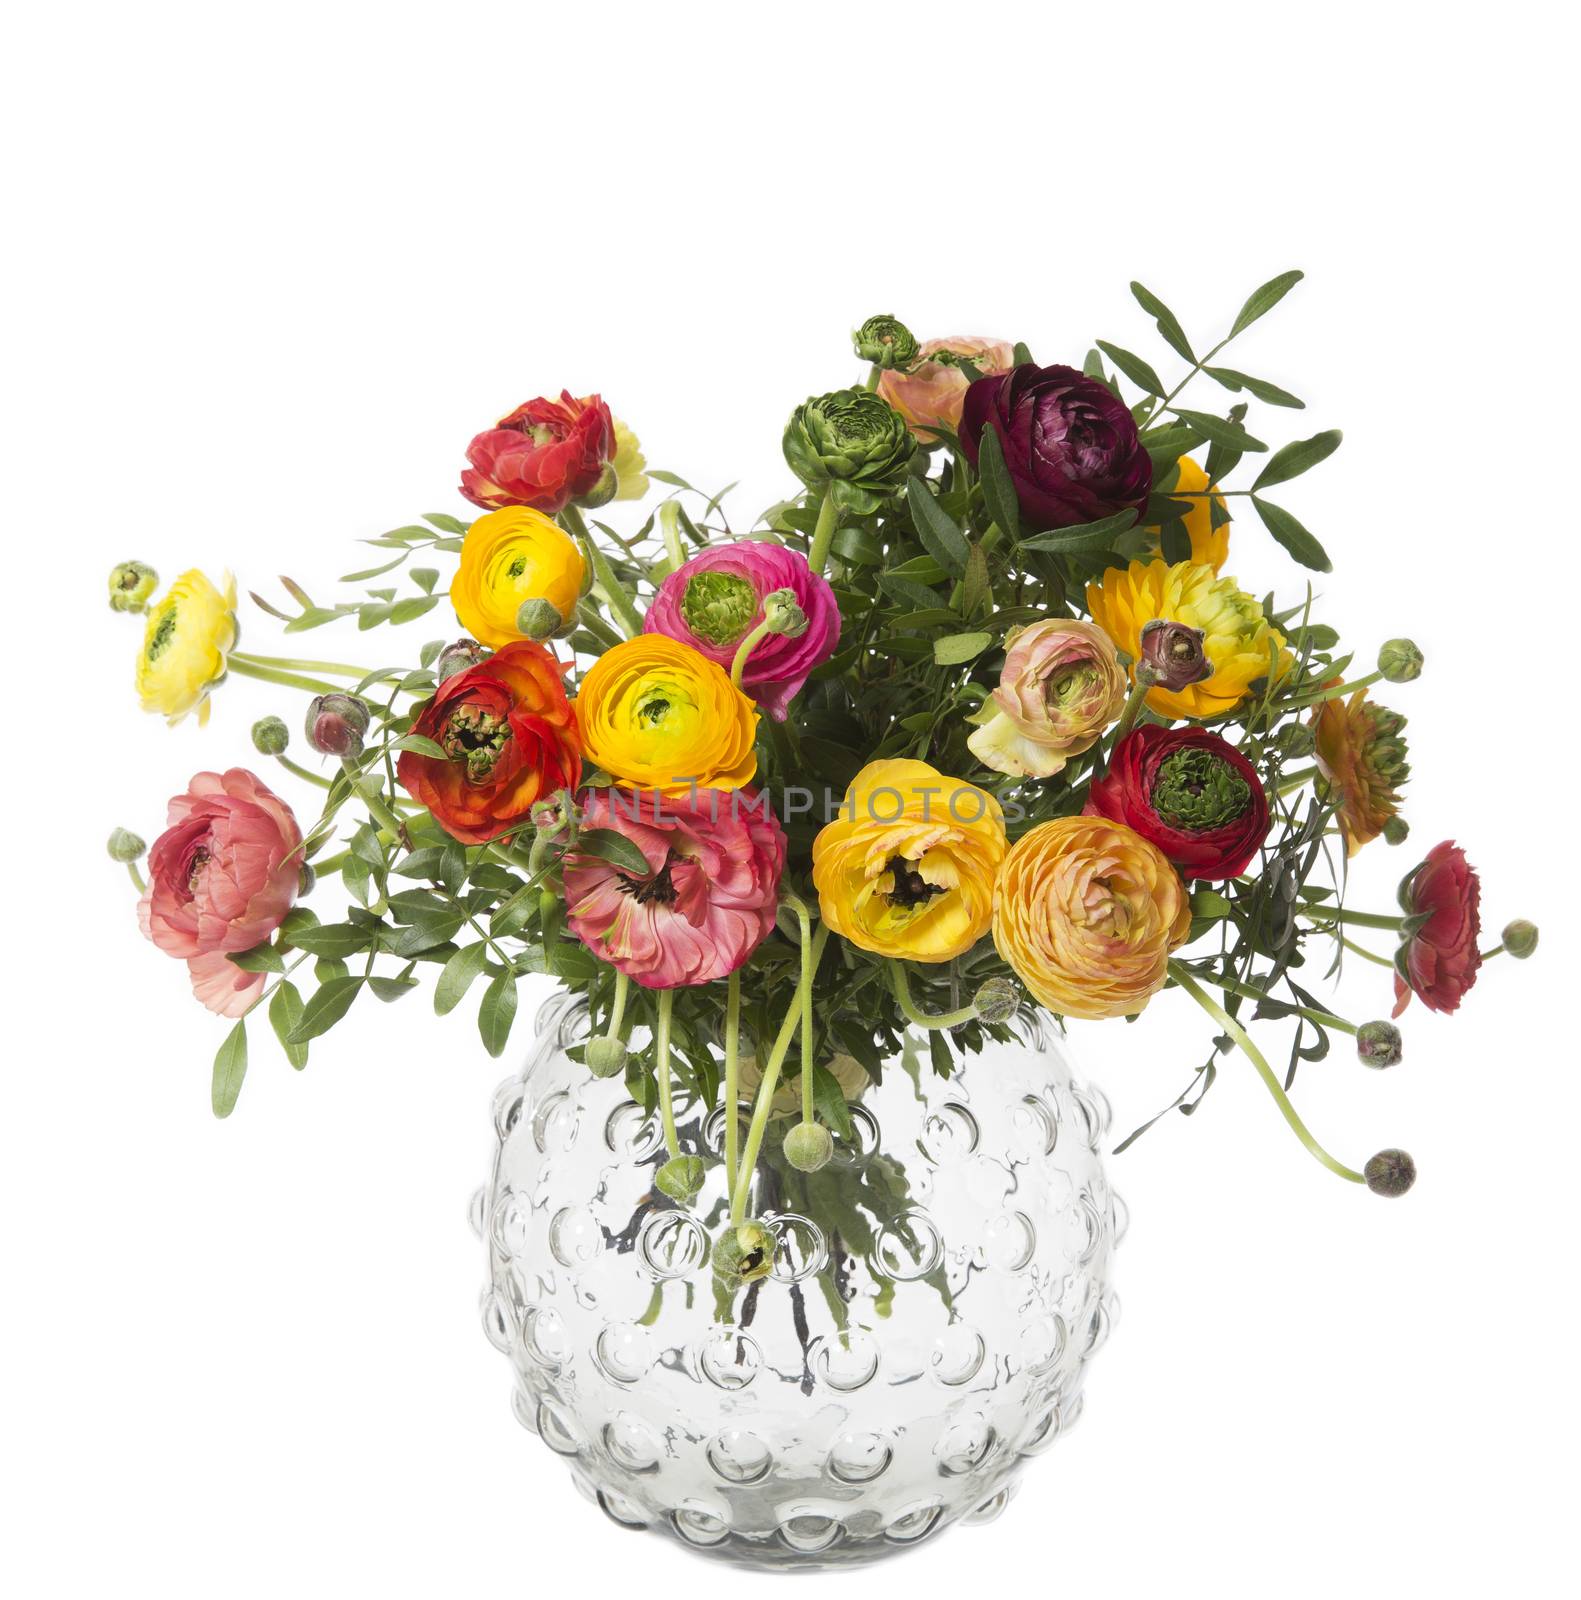 Bouquet of flowers by gemenacom